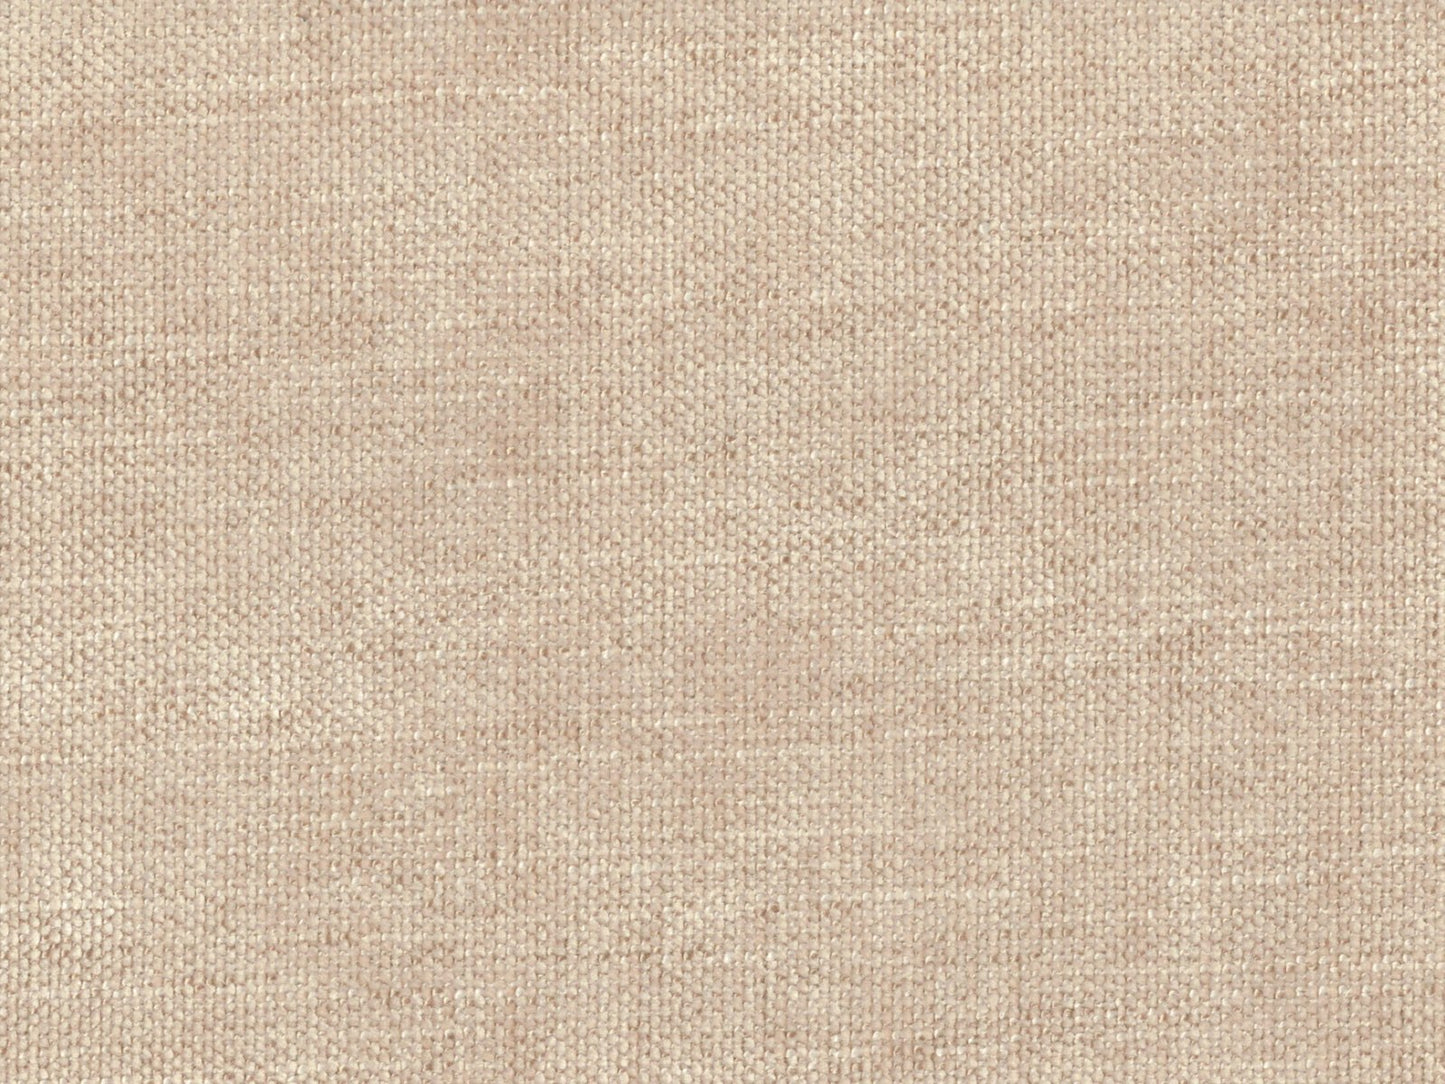 Avellino Fabric Samples - Rydan Interiors